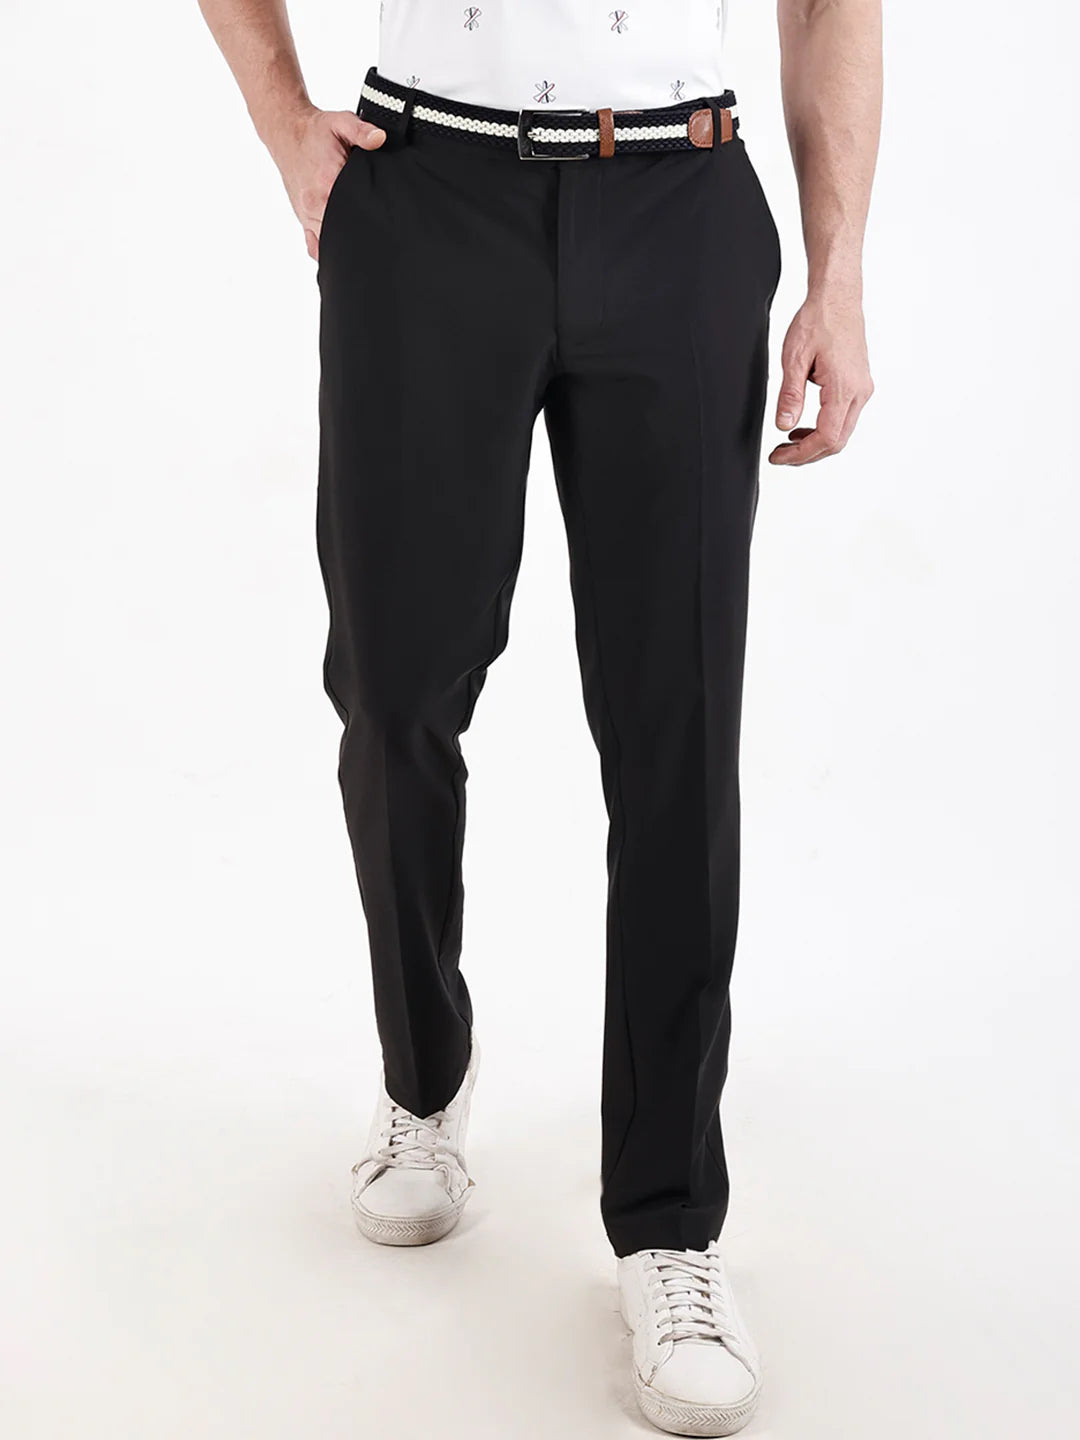 I-GOLF Men's 4-Way Stretchable Golf Trouser